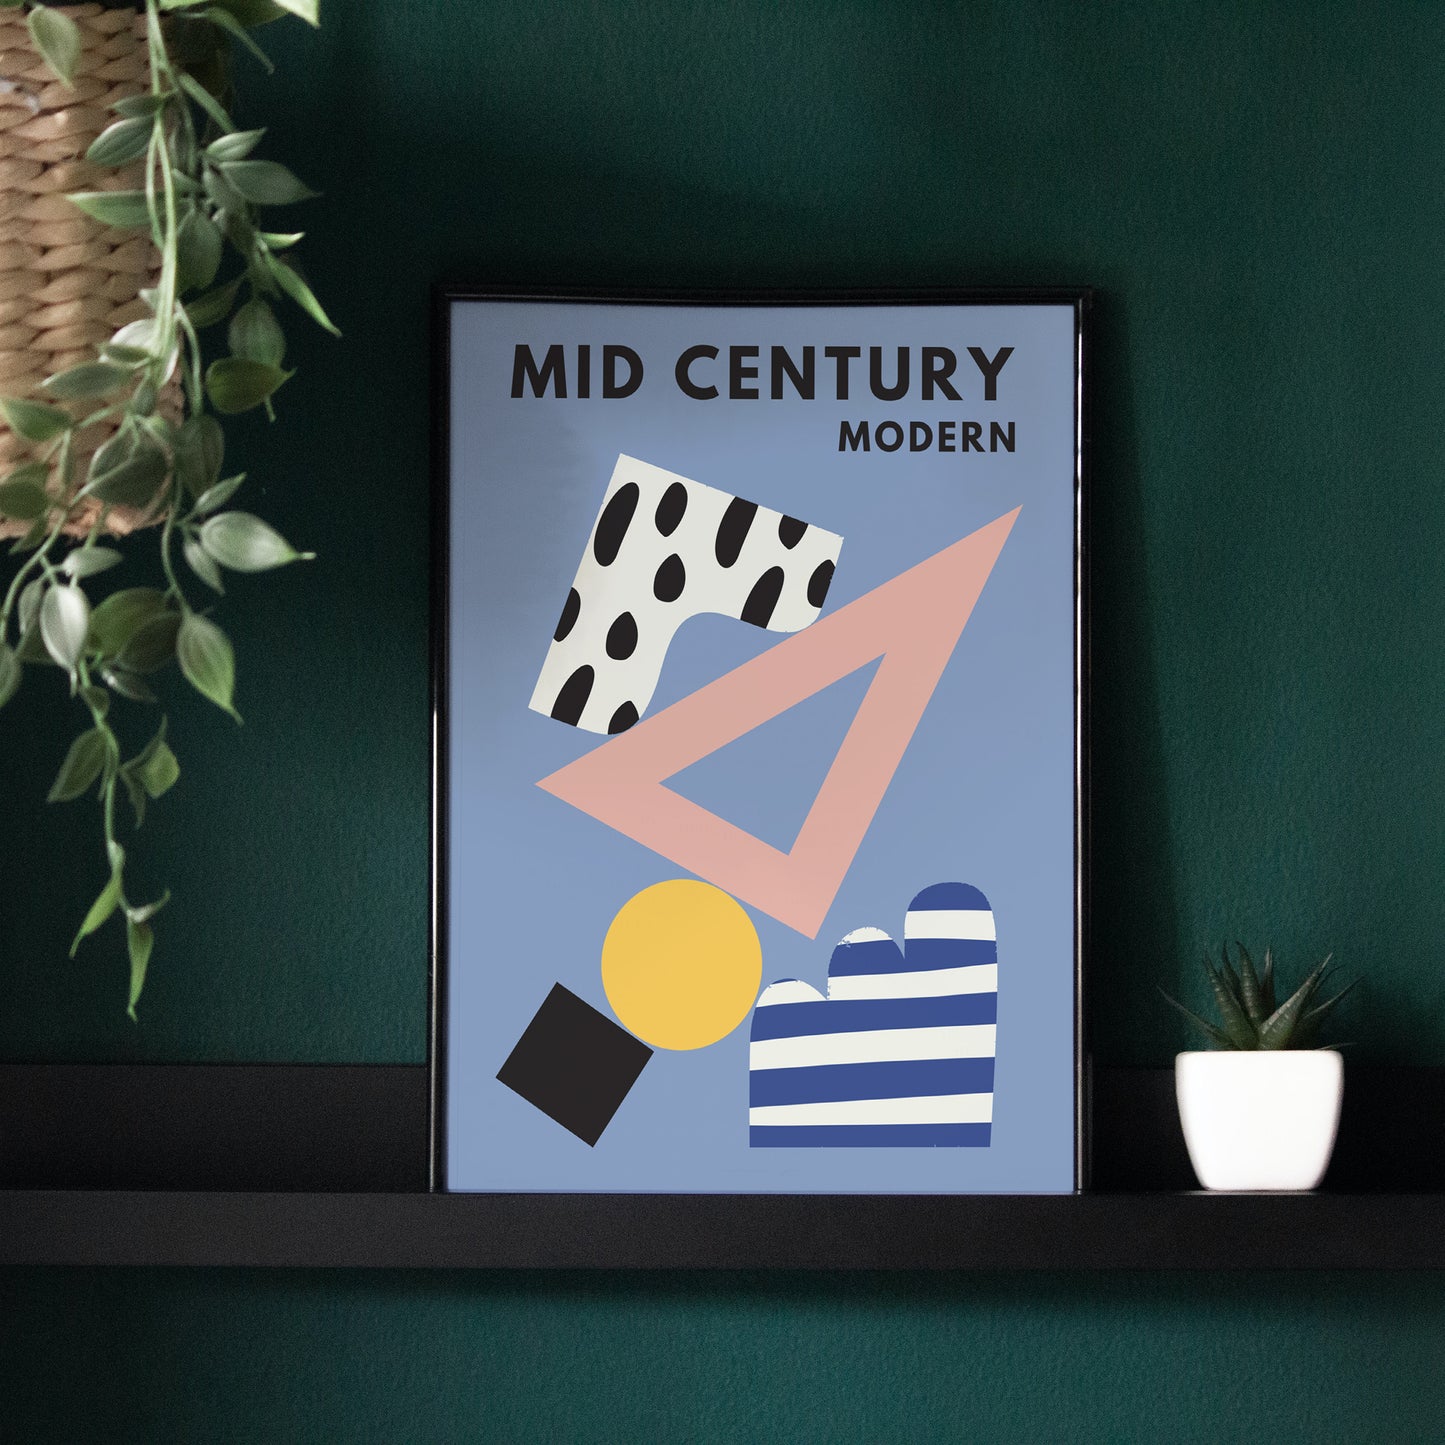 Mid Century Modern Poster